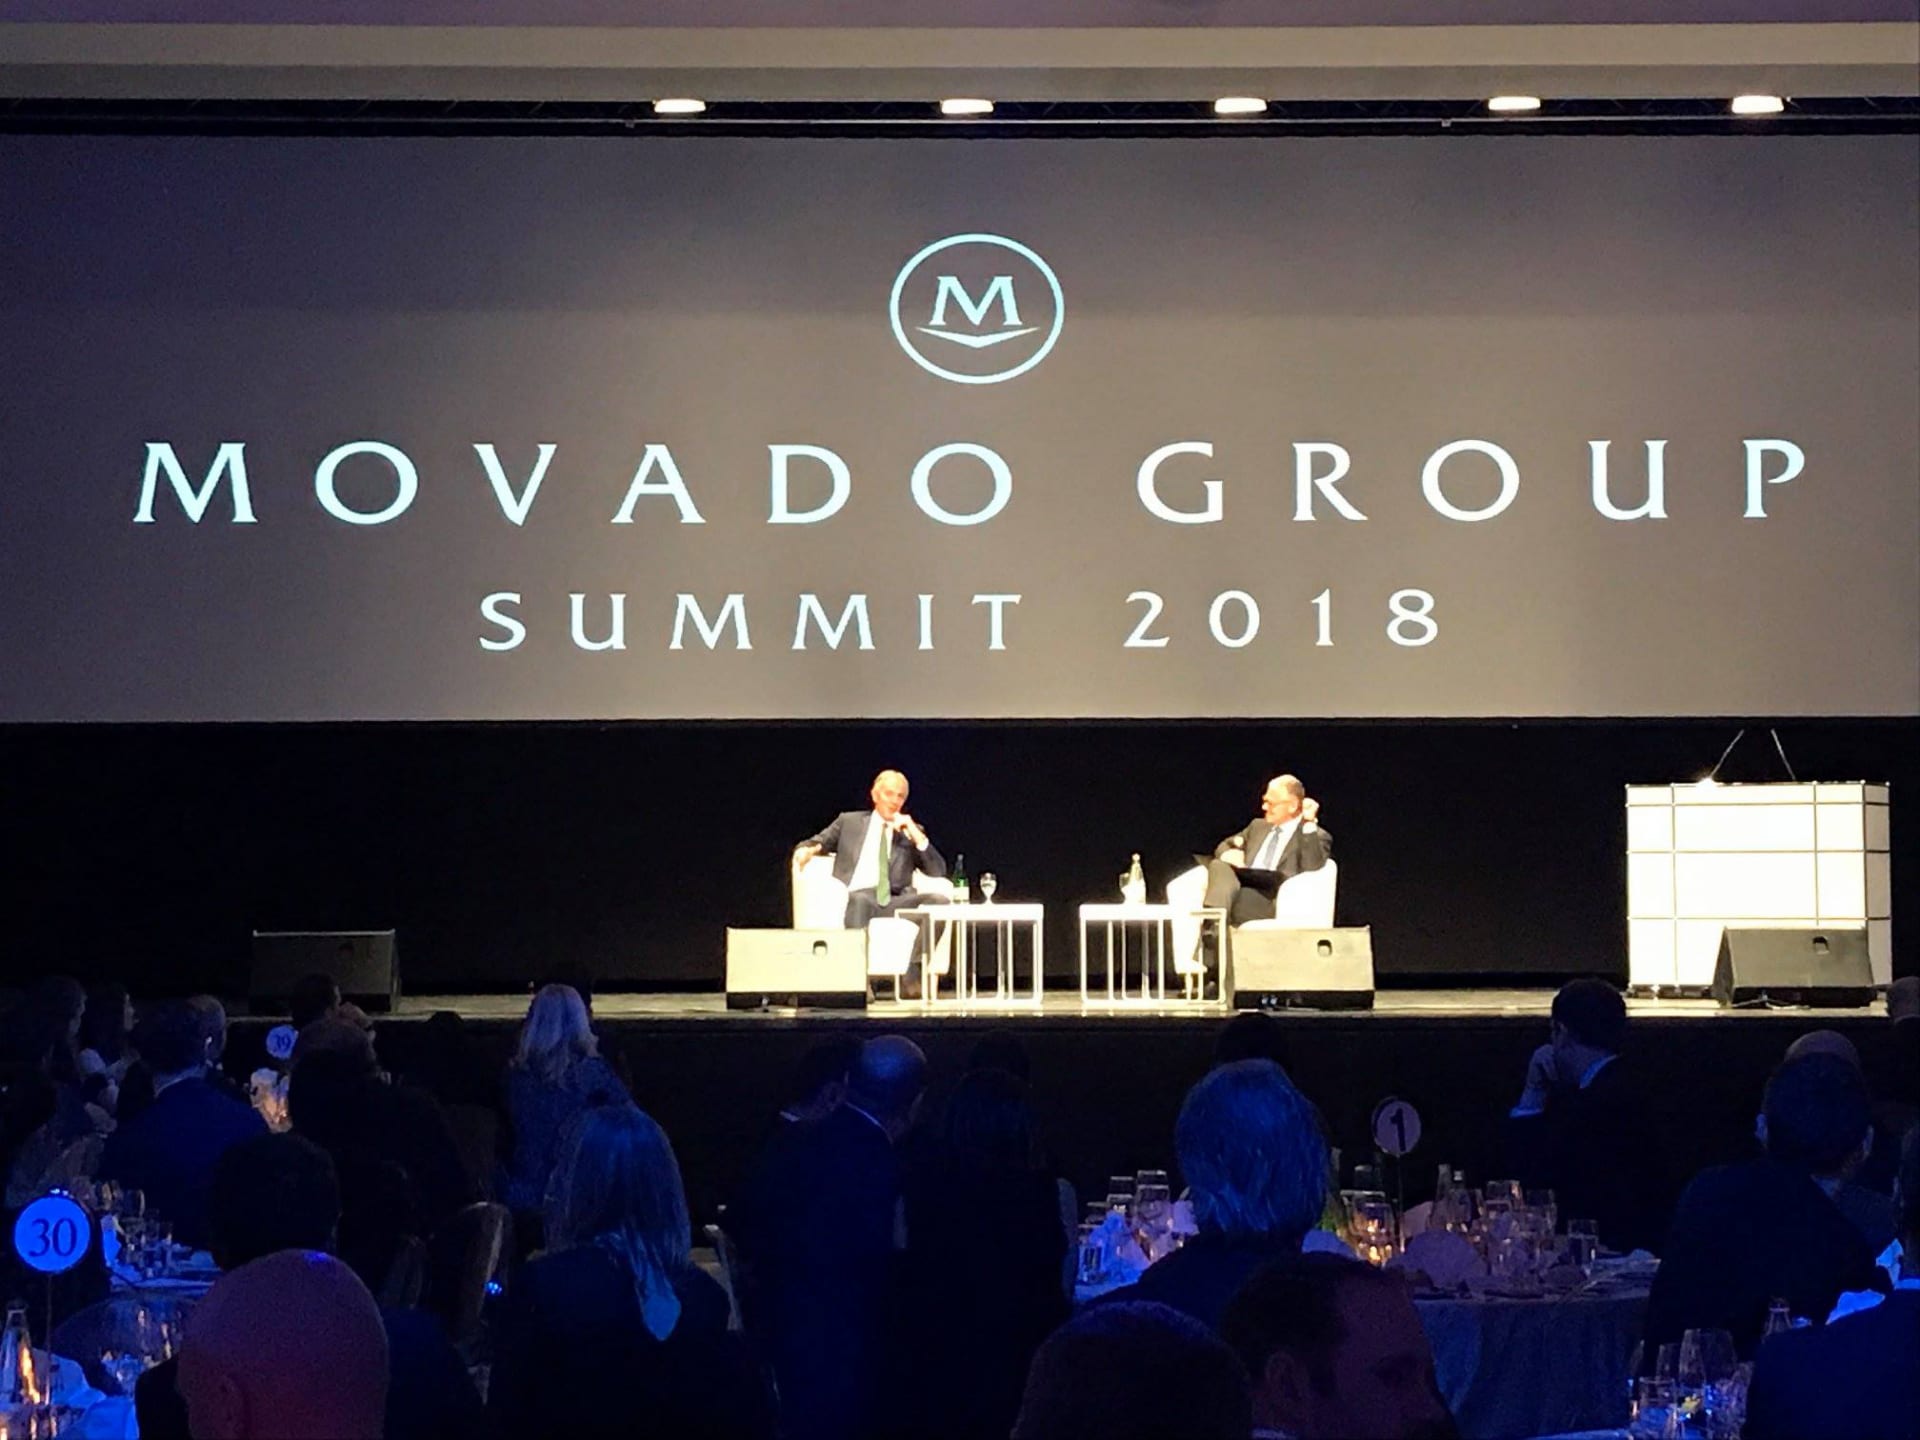 Movado group summit